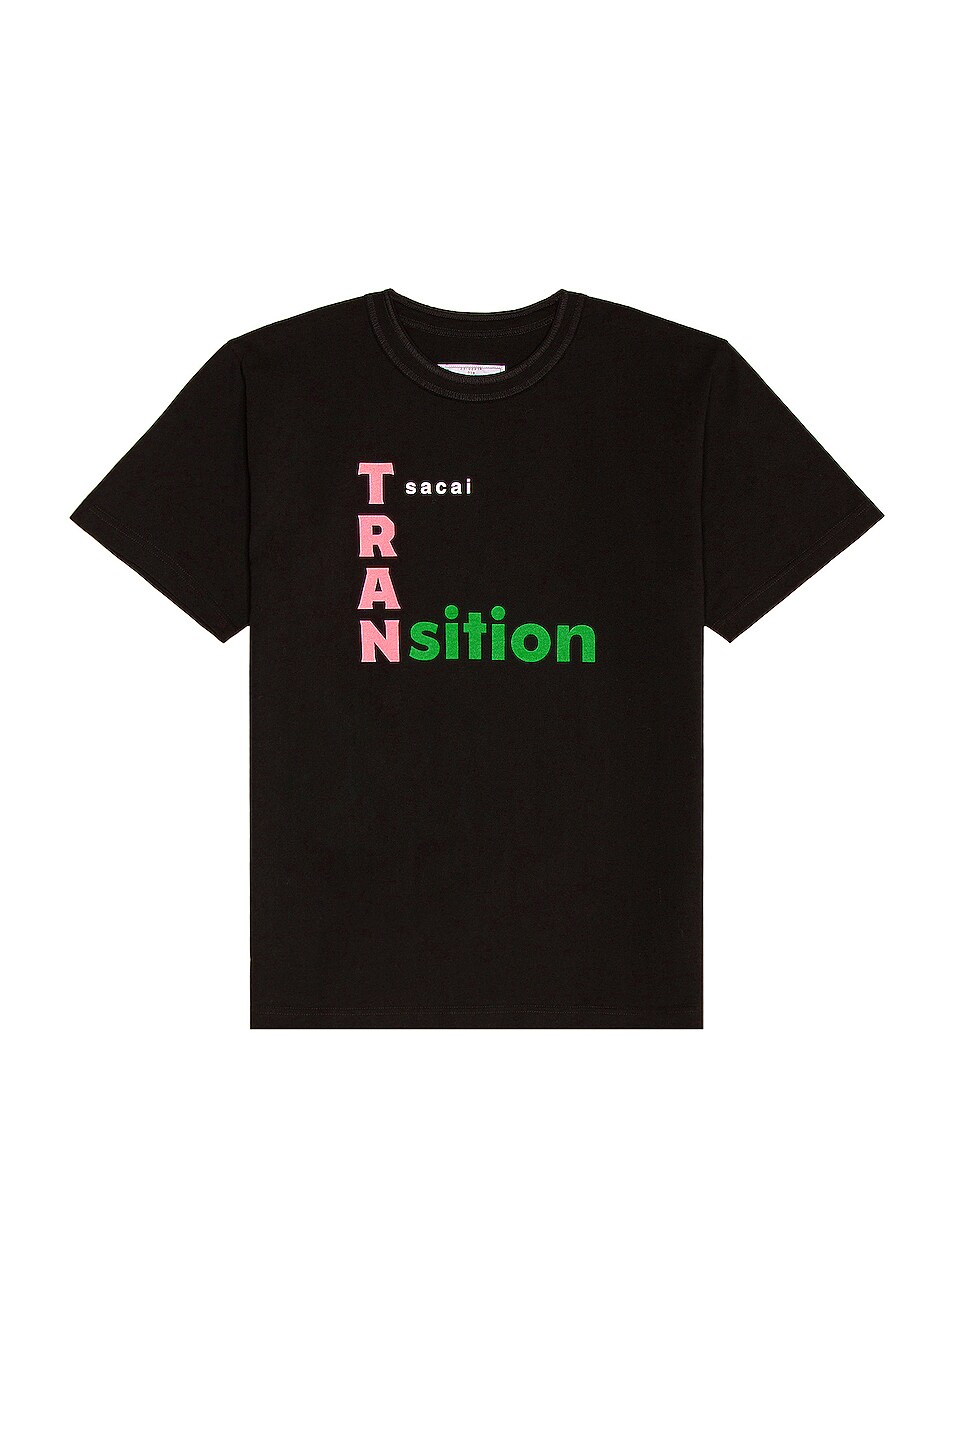 Image 1 of Sacai TRANsition T-Shirt in Black & Pink